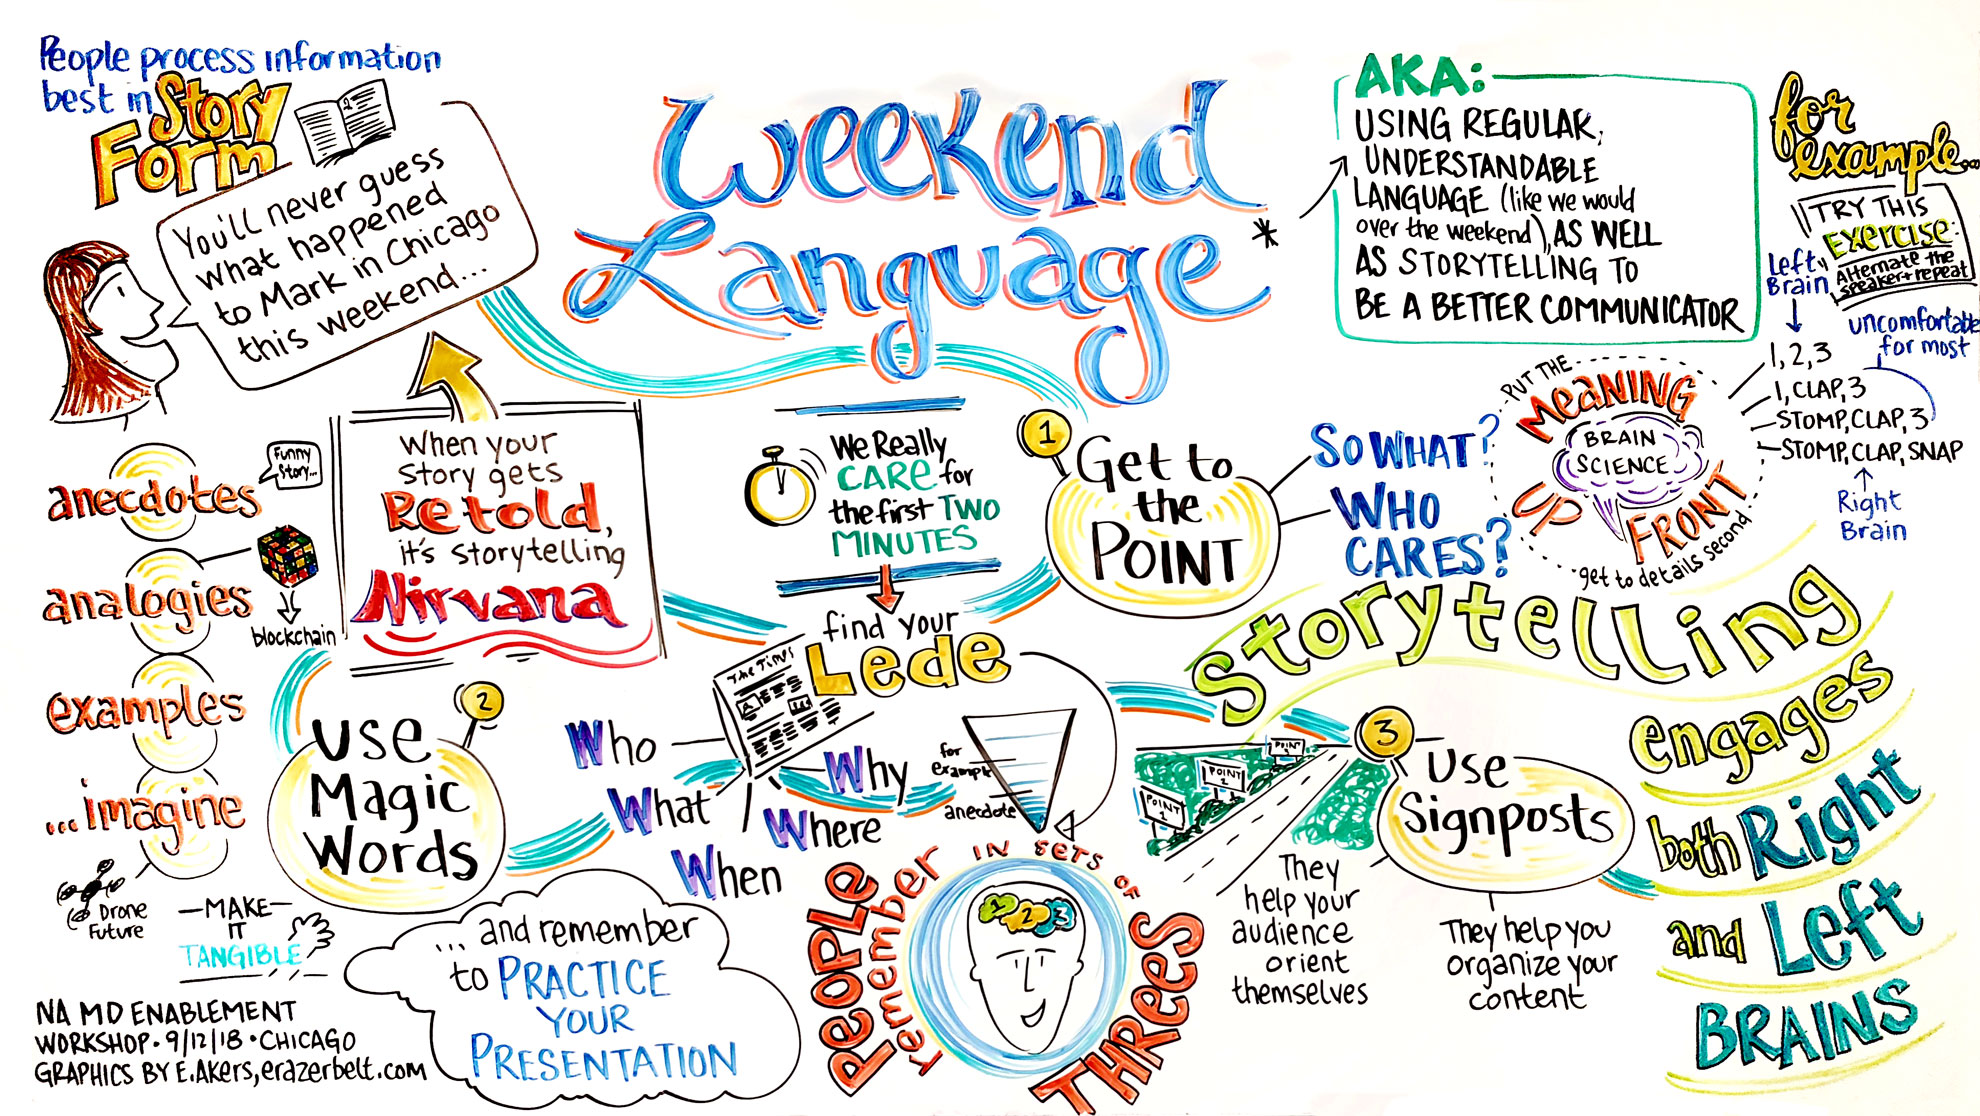 Weekend Language Whiteboard Image